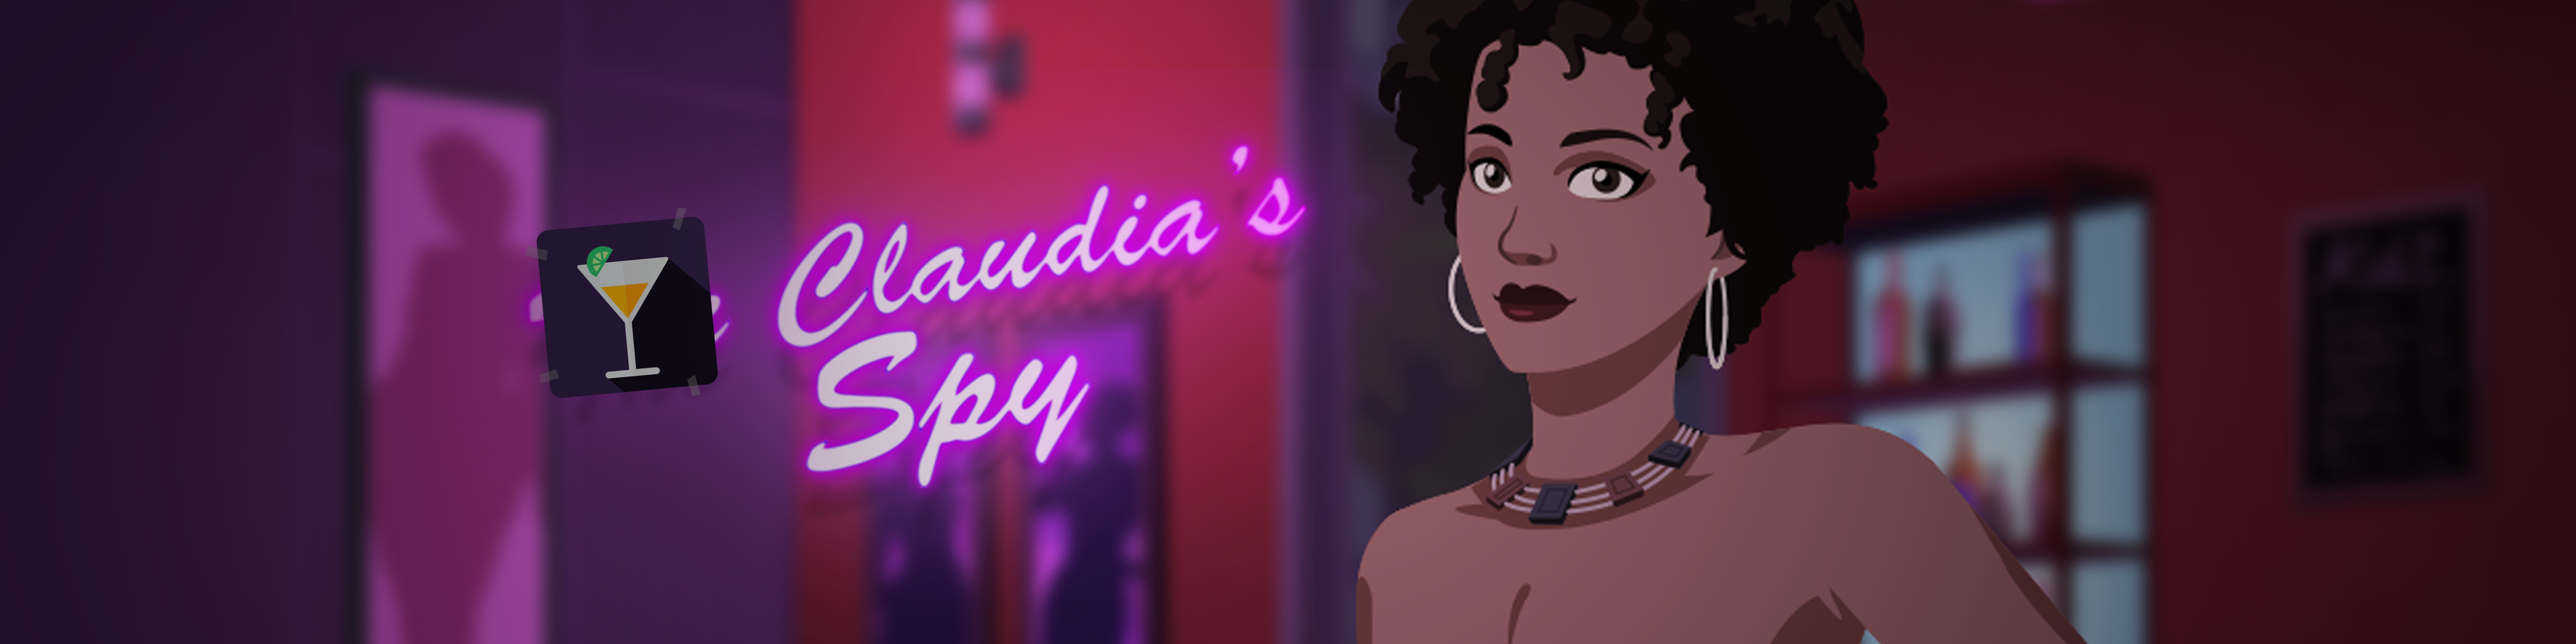 Claudia's Spy (18+ Adult Visual Novel)